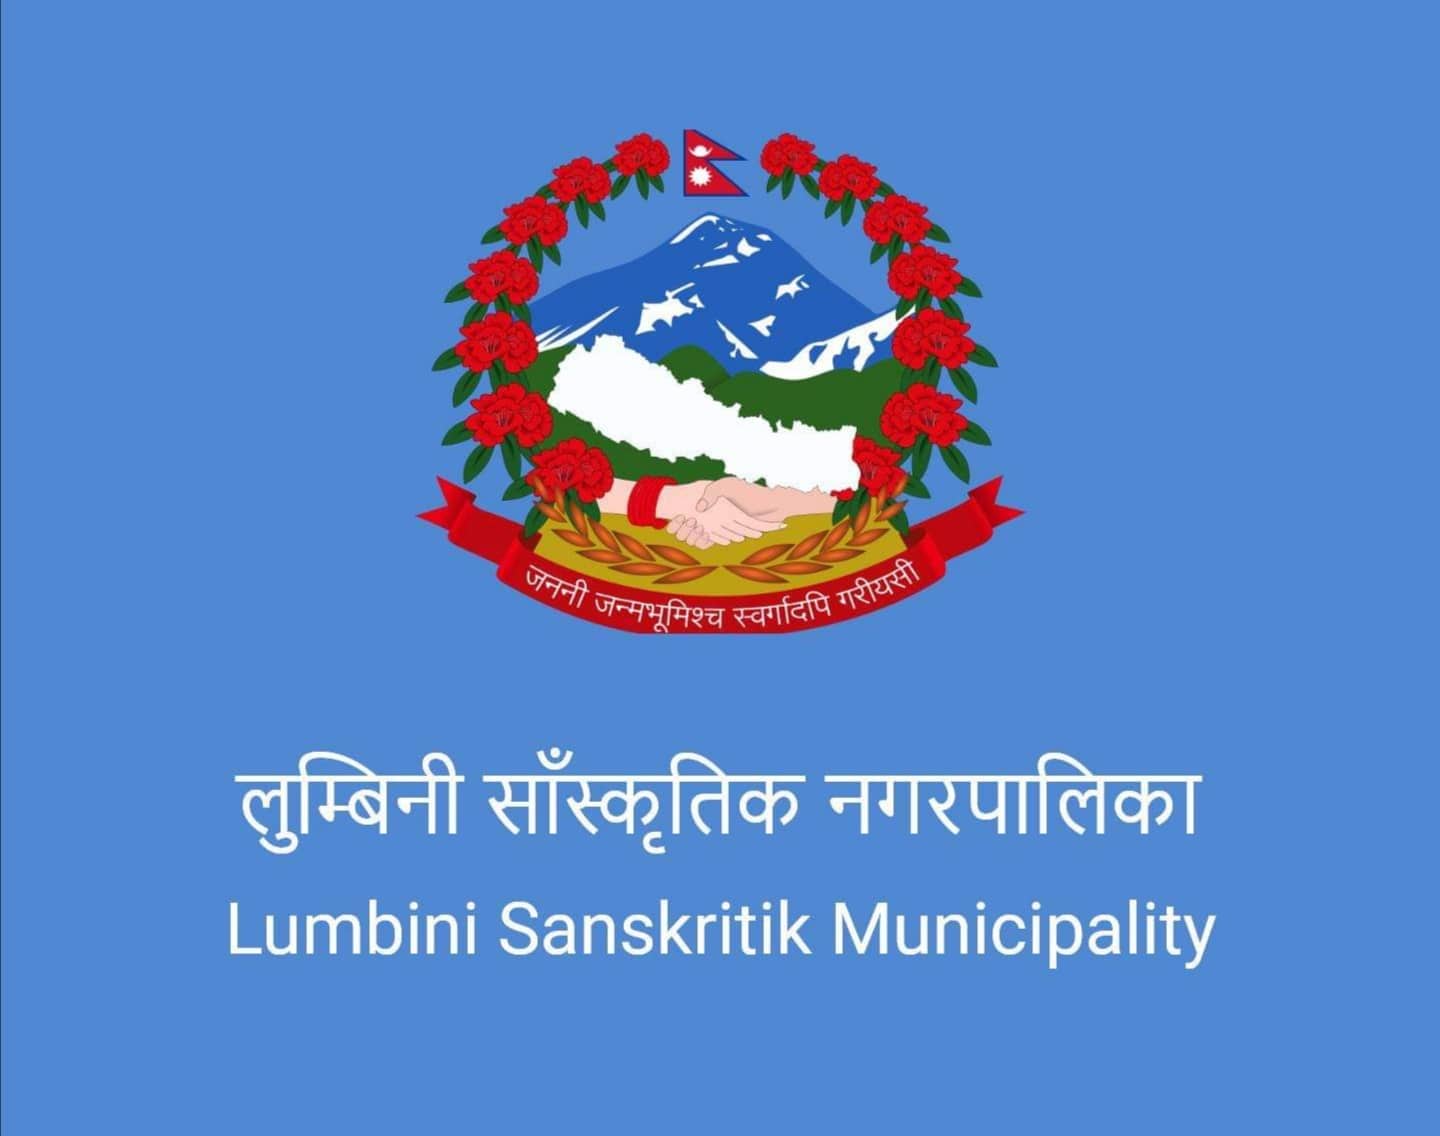 Padlock in Lumbini Sanskritik Municipality obstructs its routine works